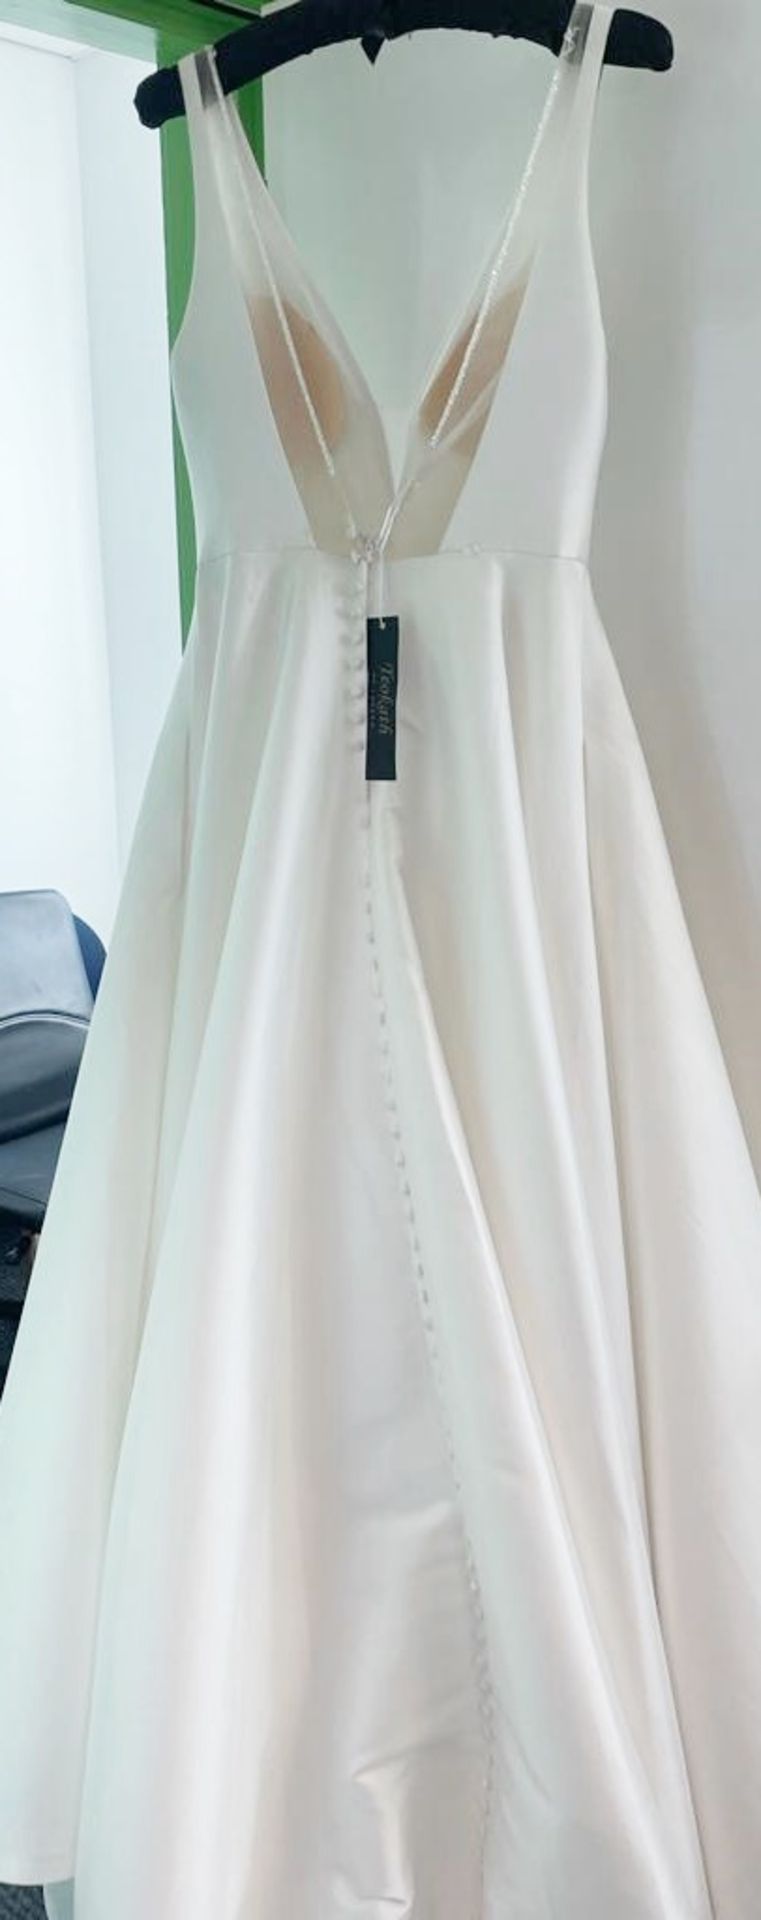 1 x ALLURE BRIDALS Sleeveless Designer Wedding Dress Bridal Gown - Style: 9813 - Size: UK 10 - - Image 13 of 13